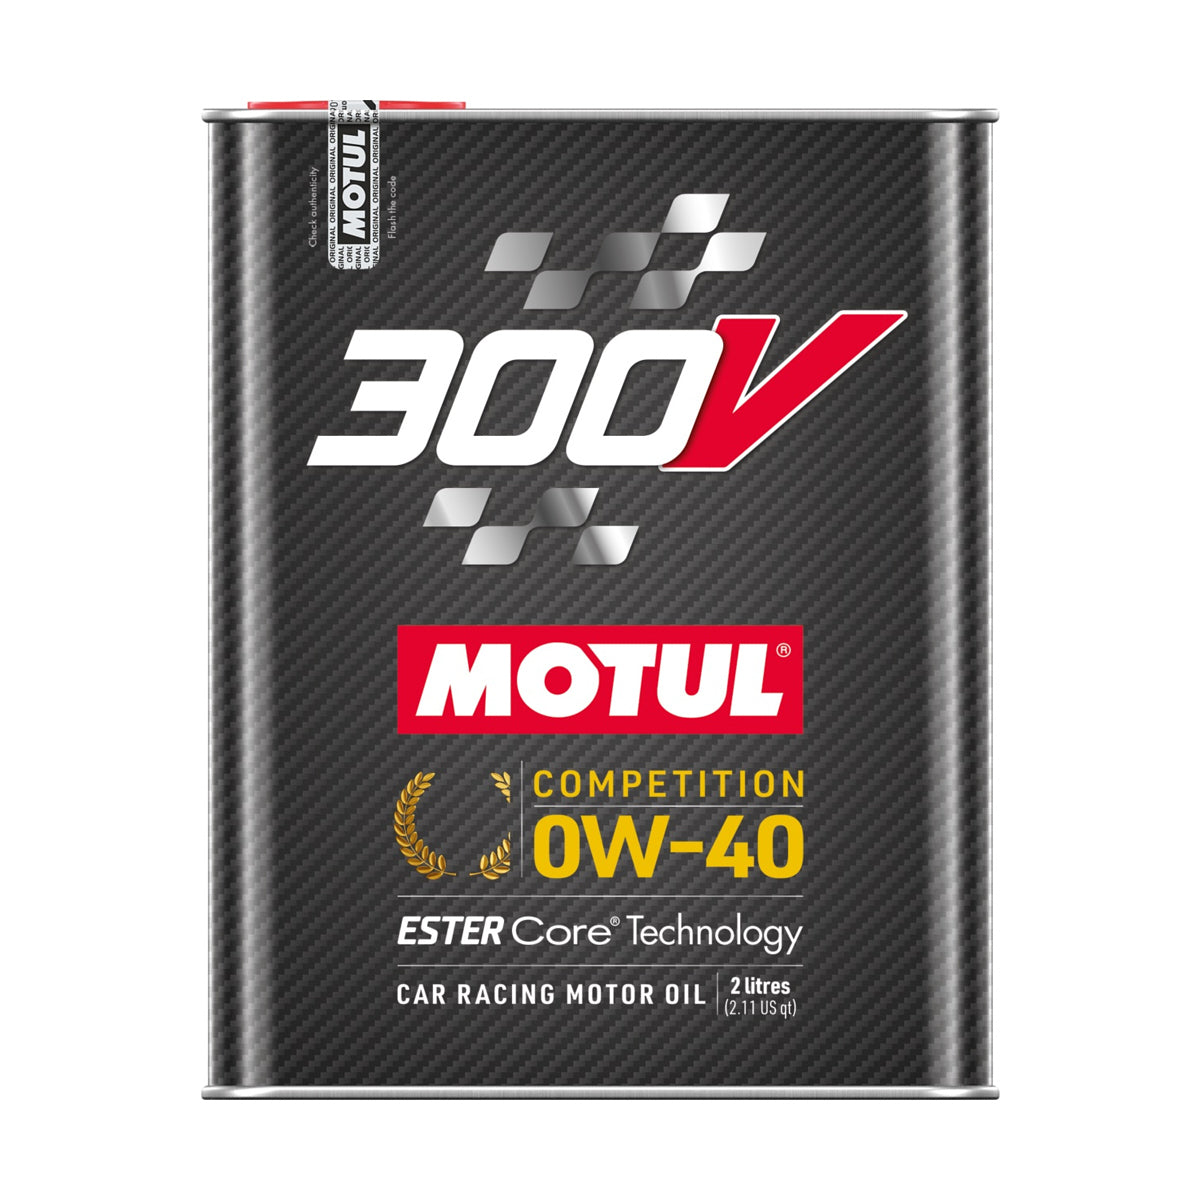 Motul 300V Competition Oil 0w40 2 Liter MTL110857